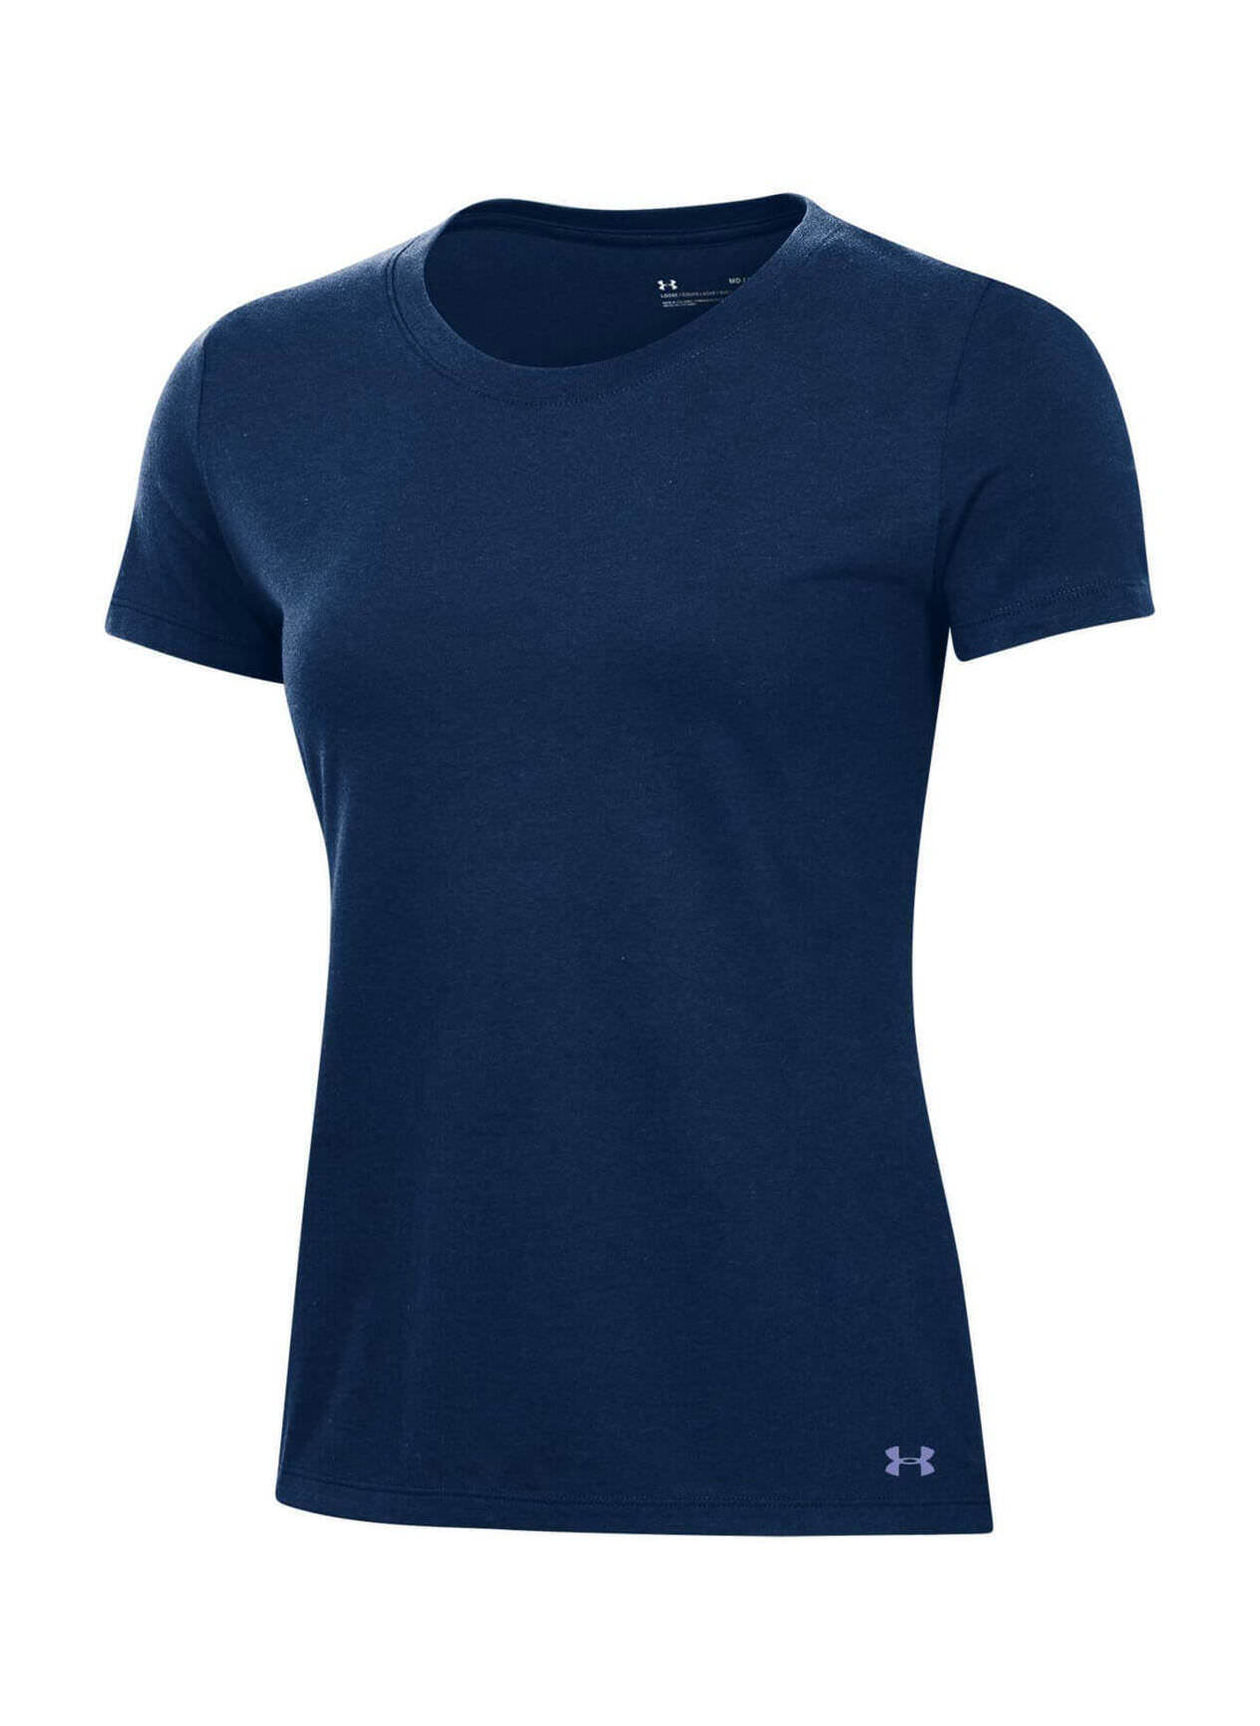 Under Armour Women's Midnight Navy Cotton T-Shirt